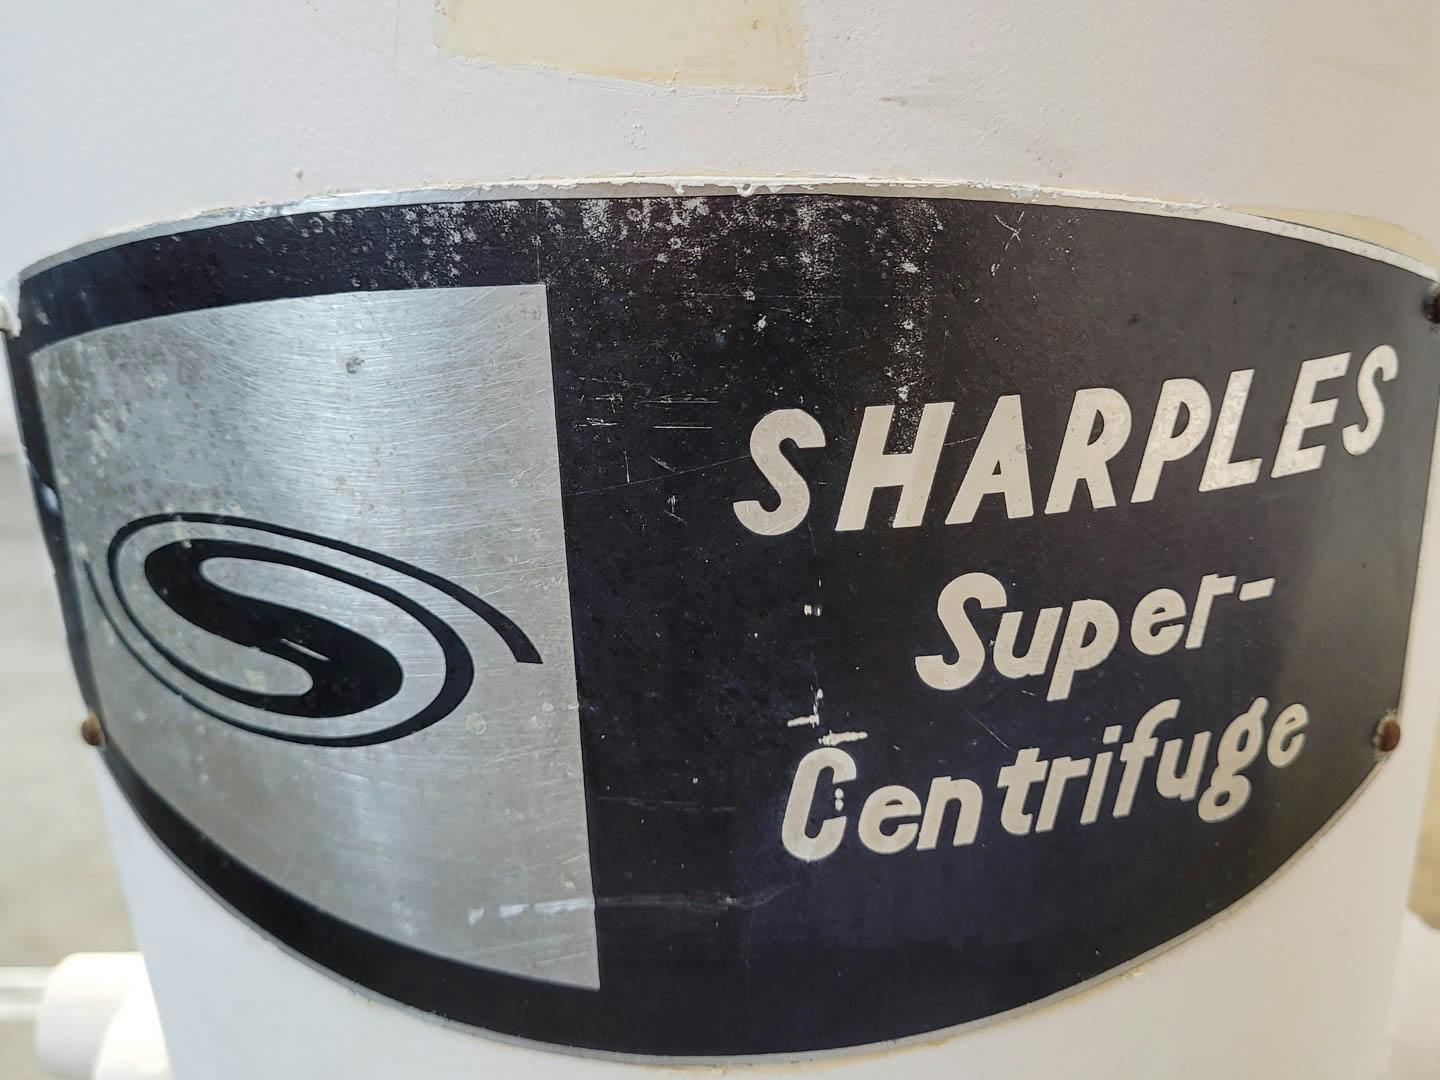 Sharples MV8816 "super centrifuge" - Separator - image 4